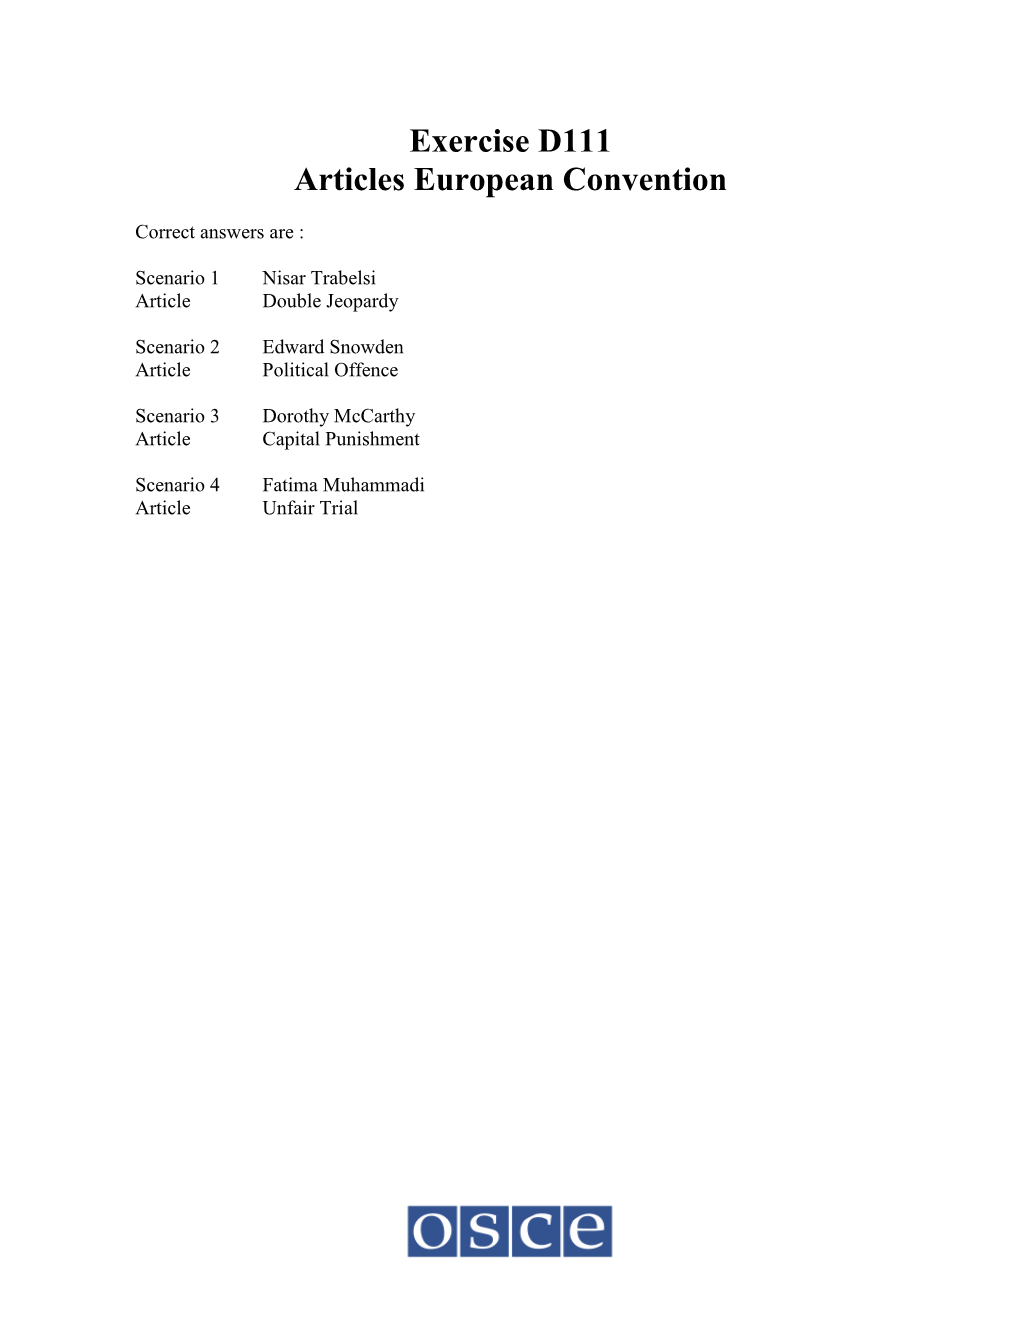 Articles European Convention